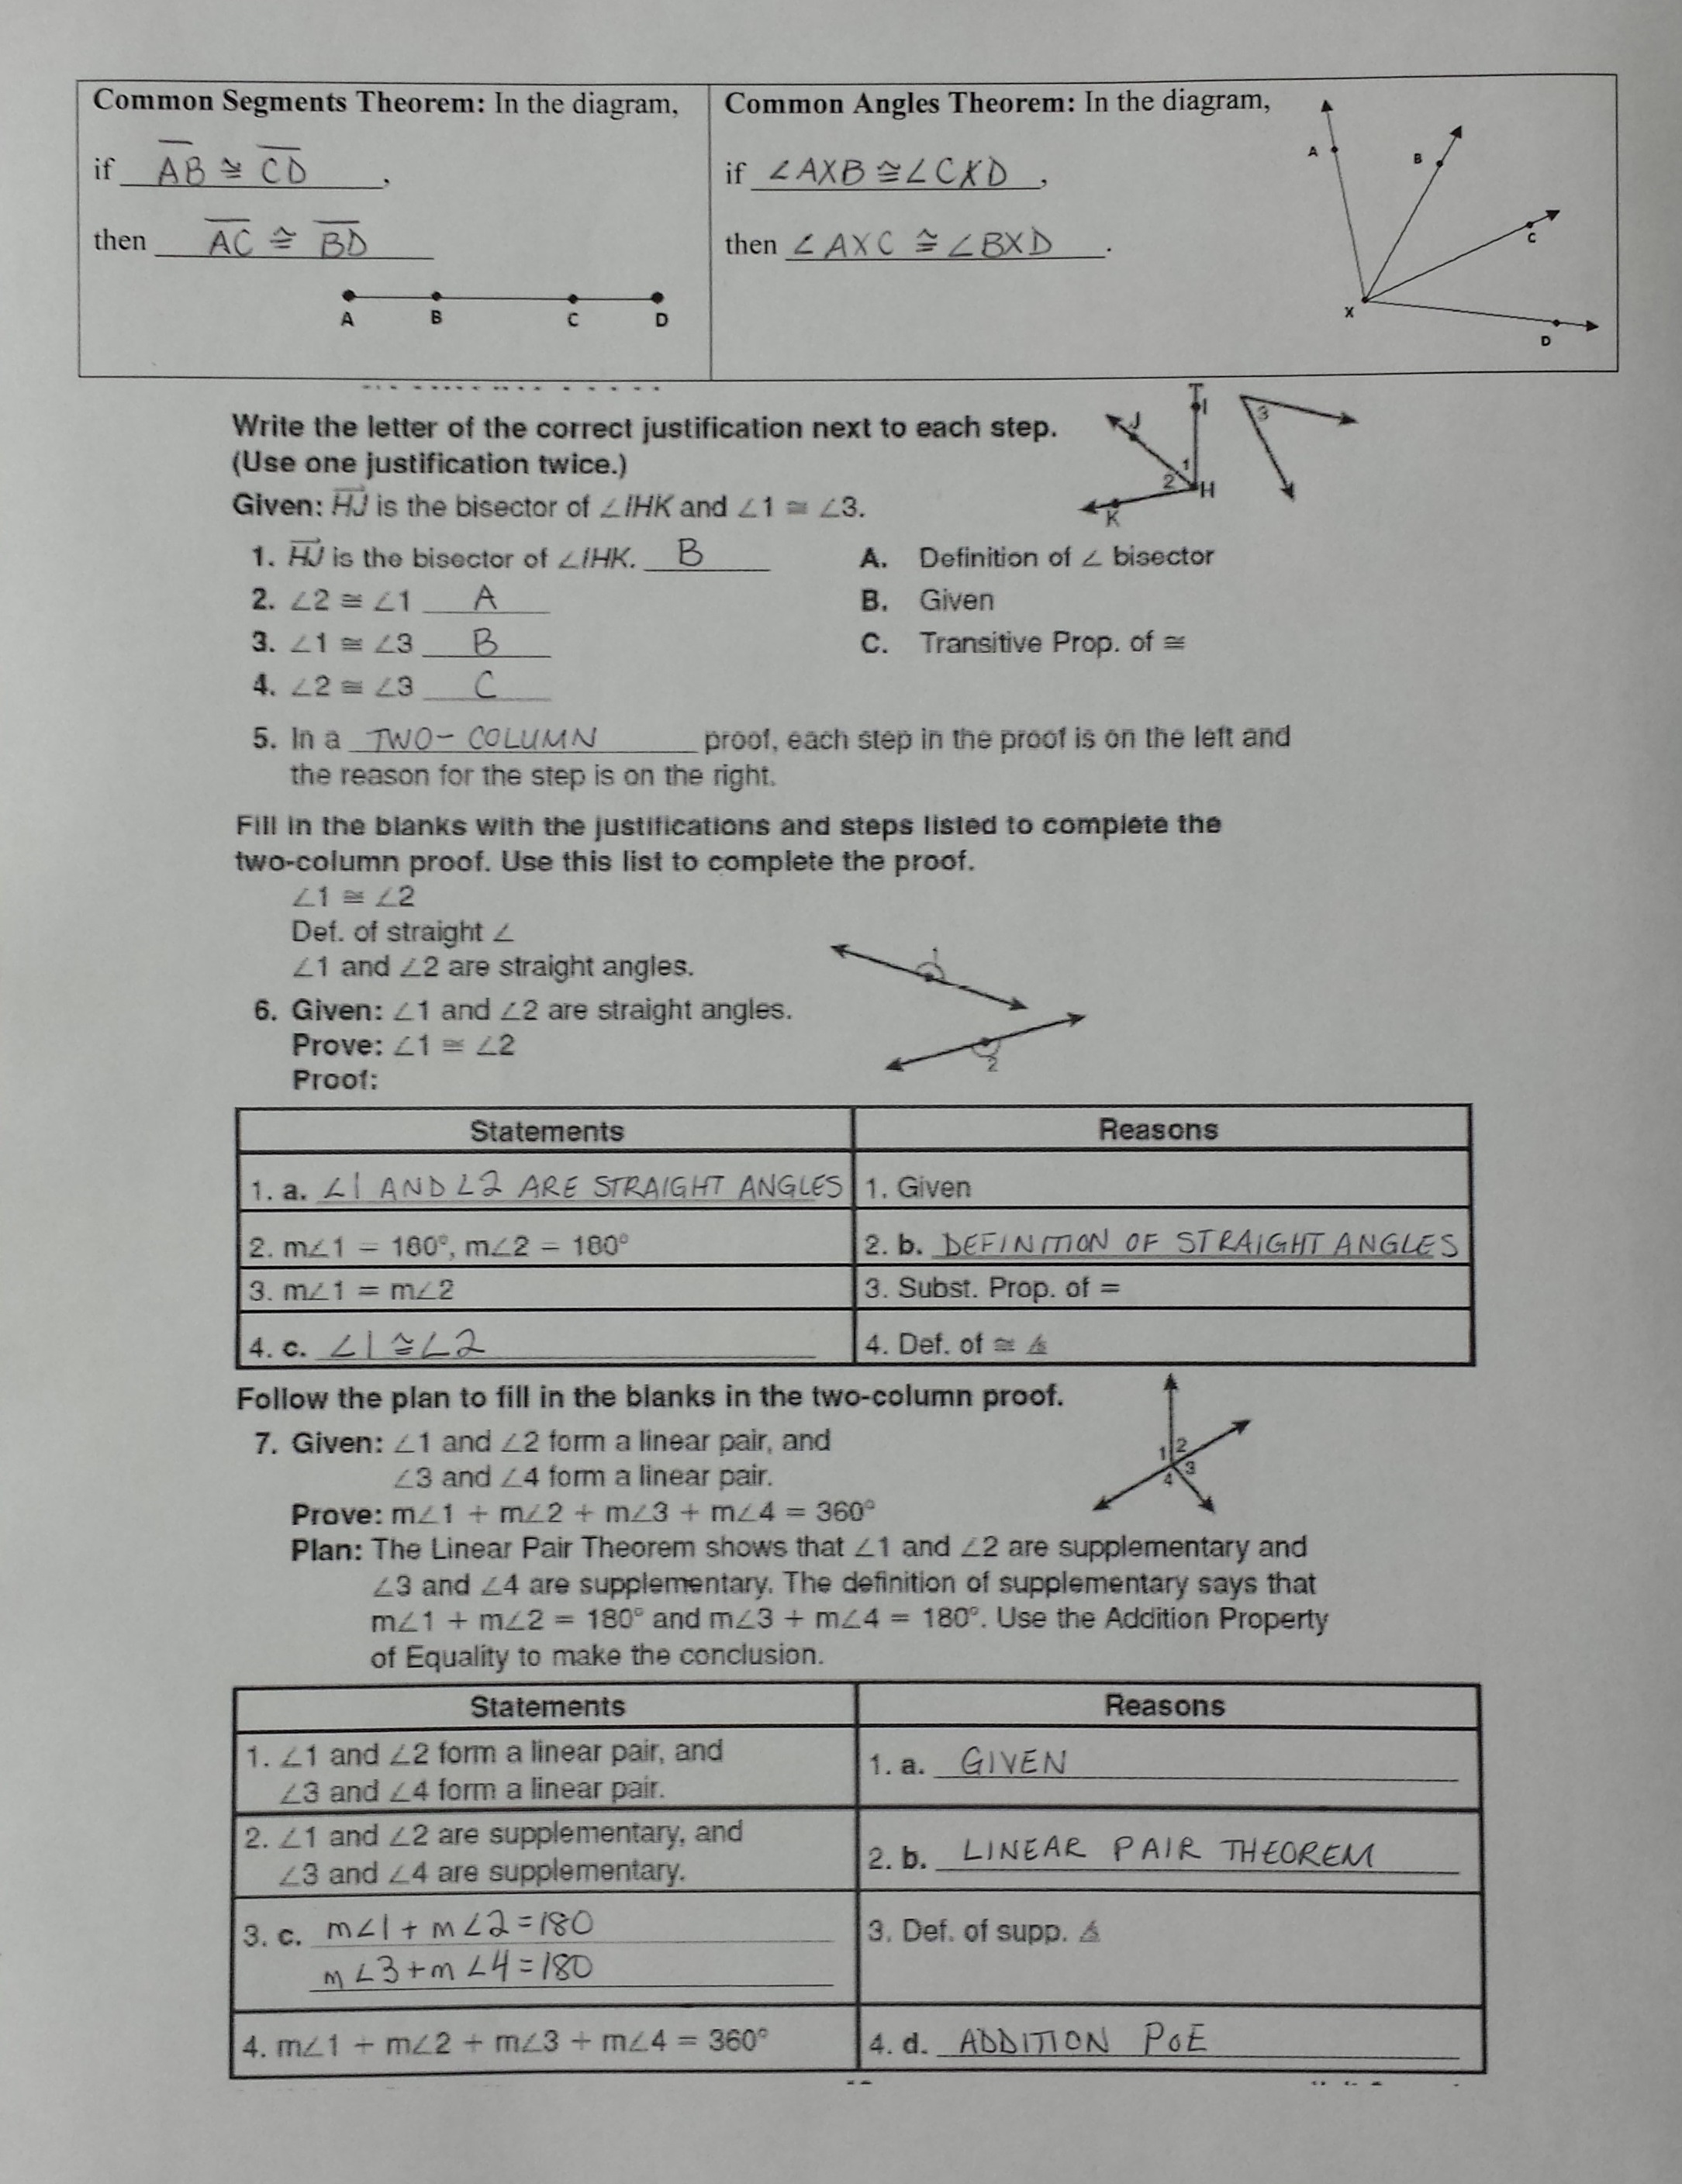 proofs-worksheet-1-answers-ivuyteq